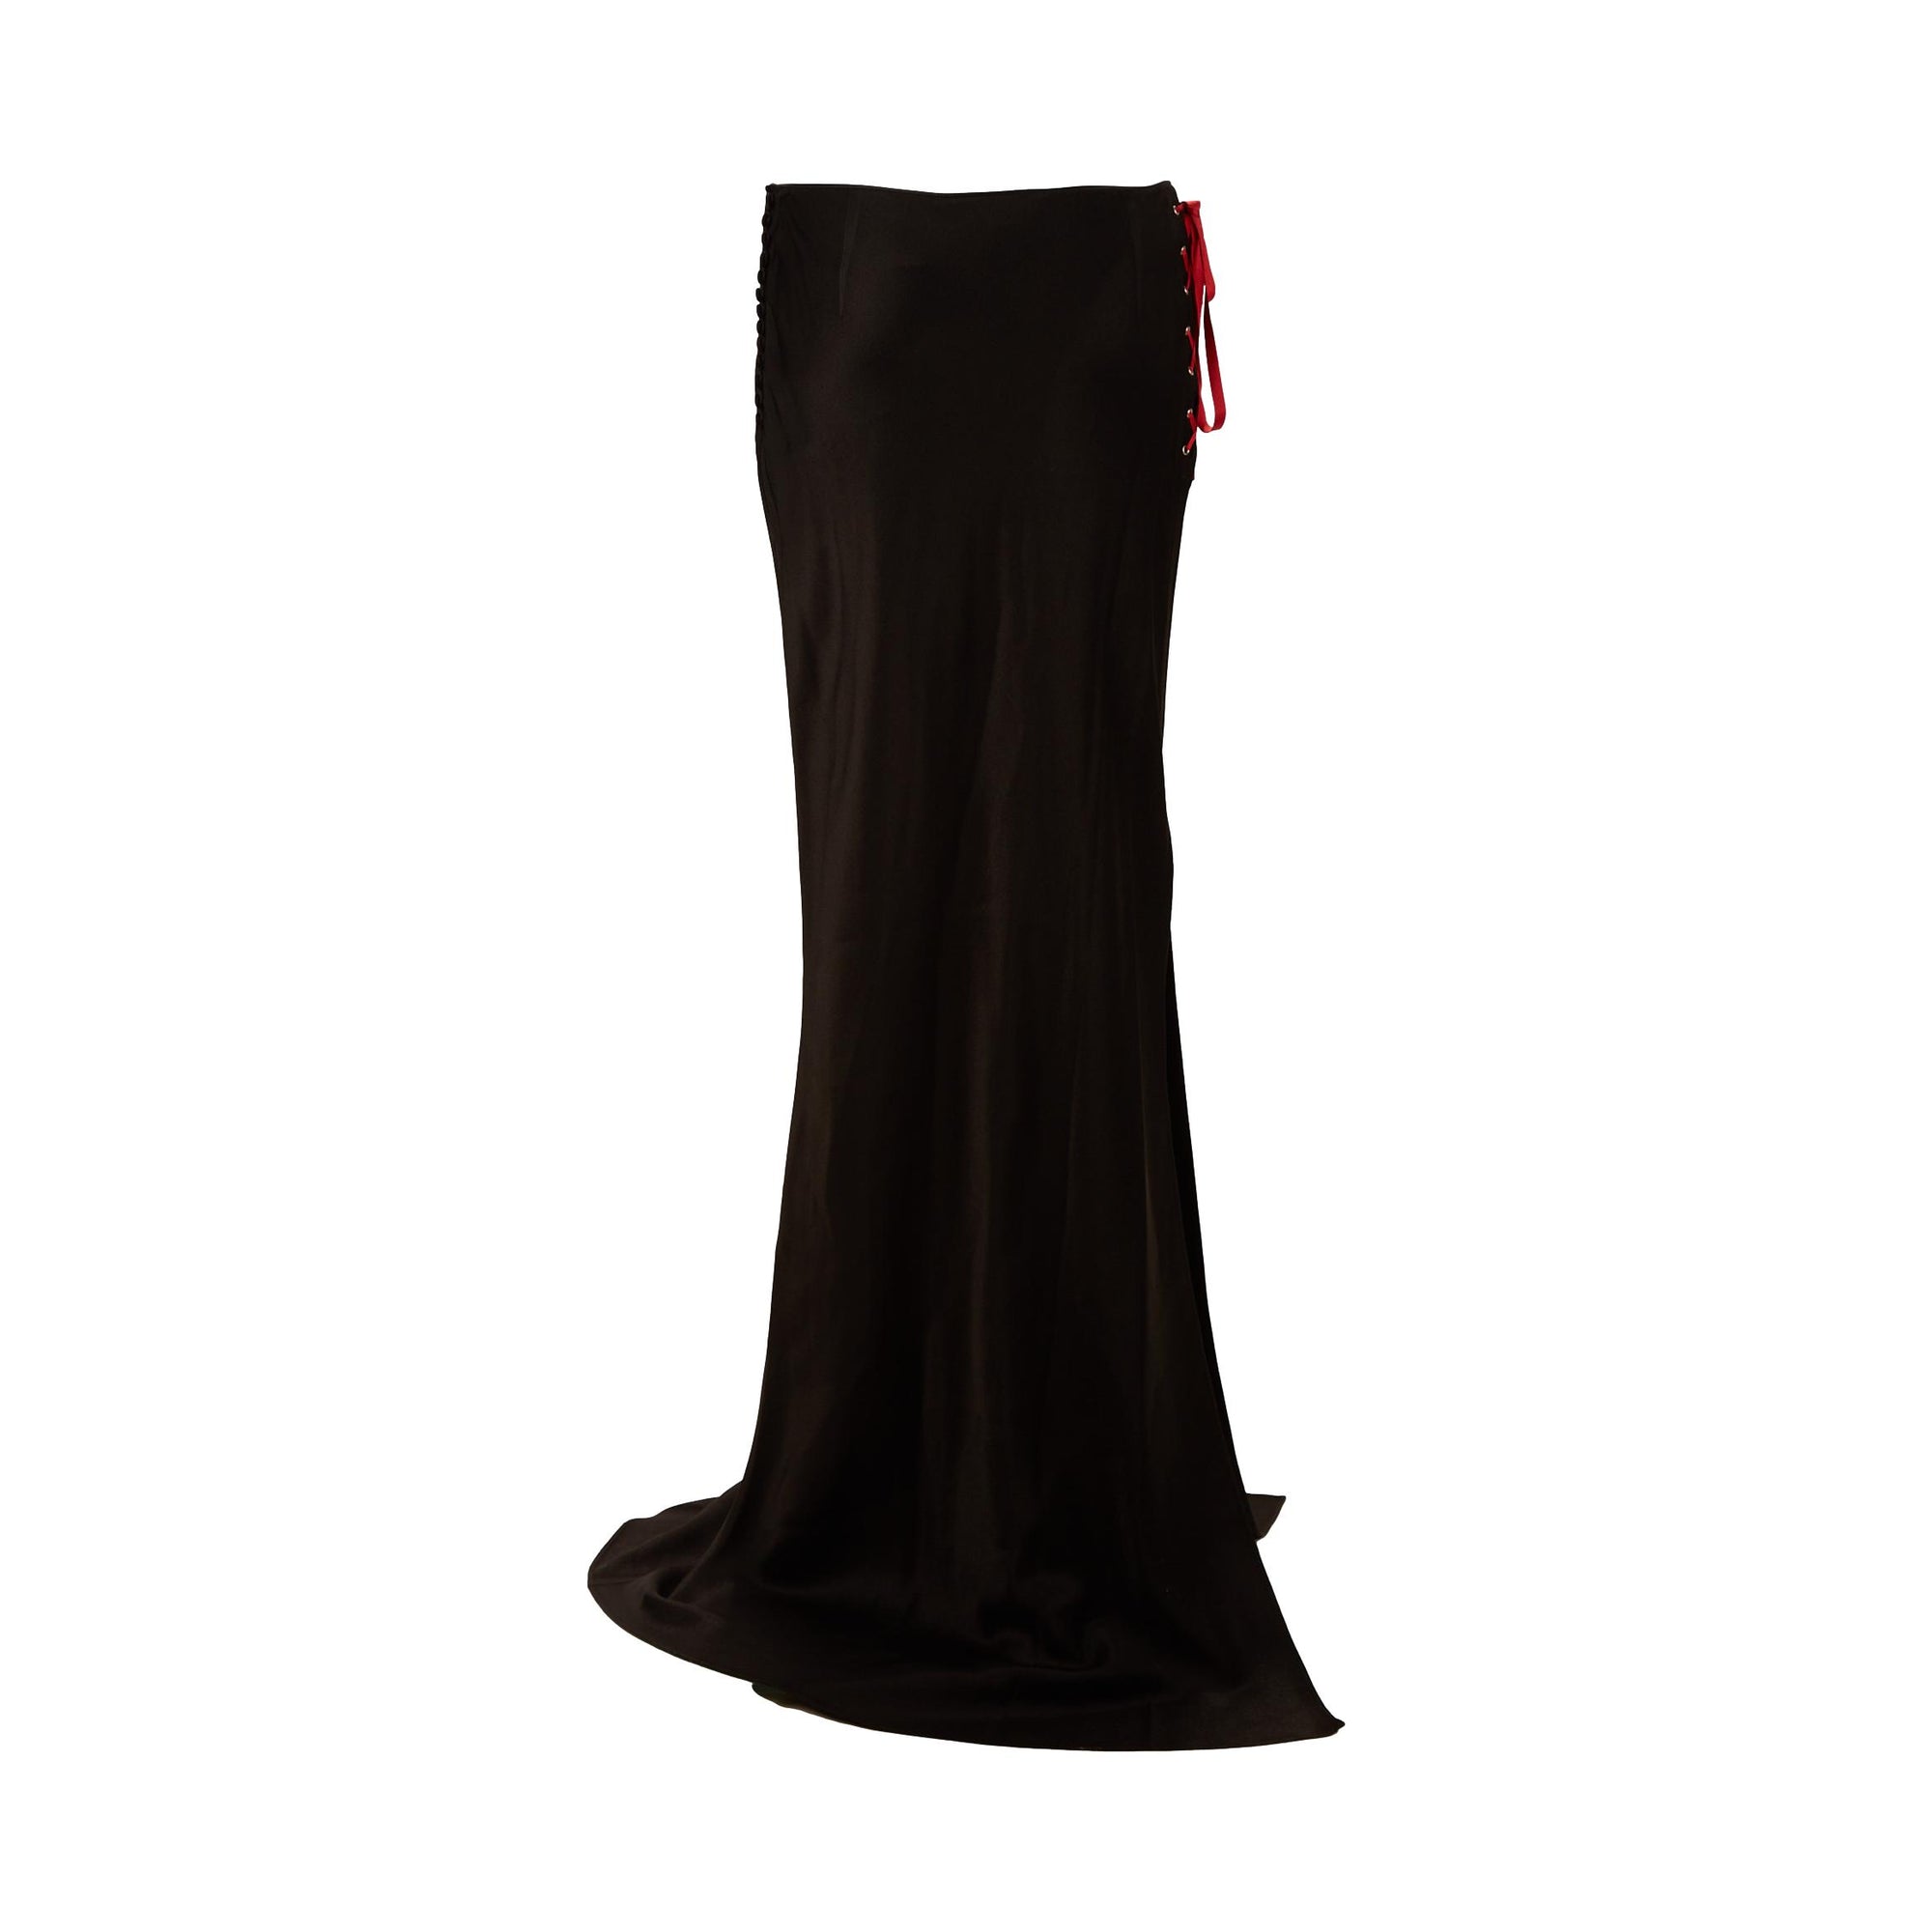 Galliano Black Tie Skirt